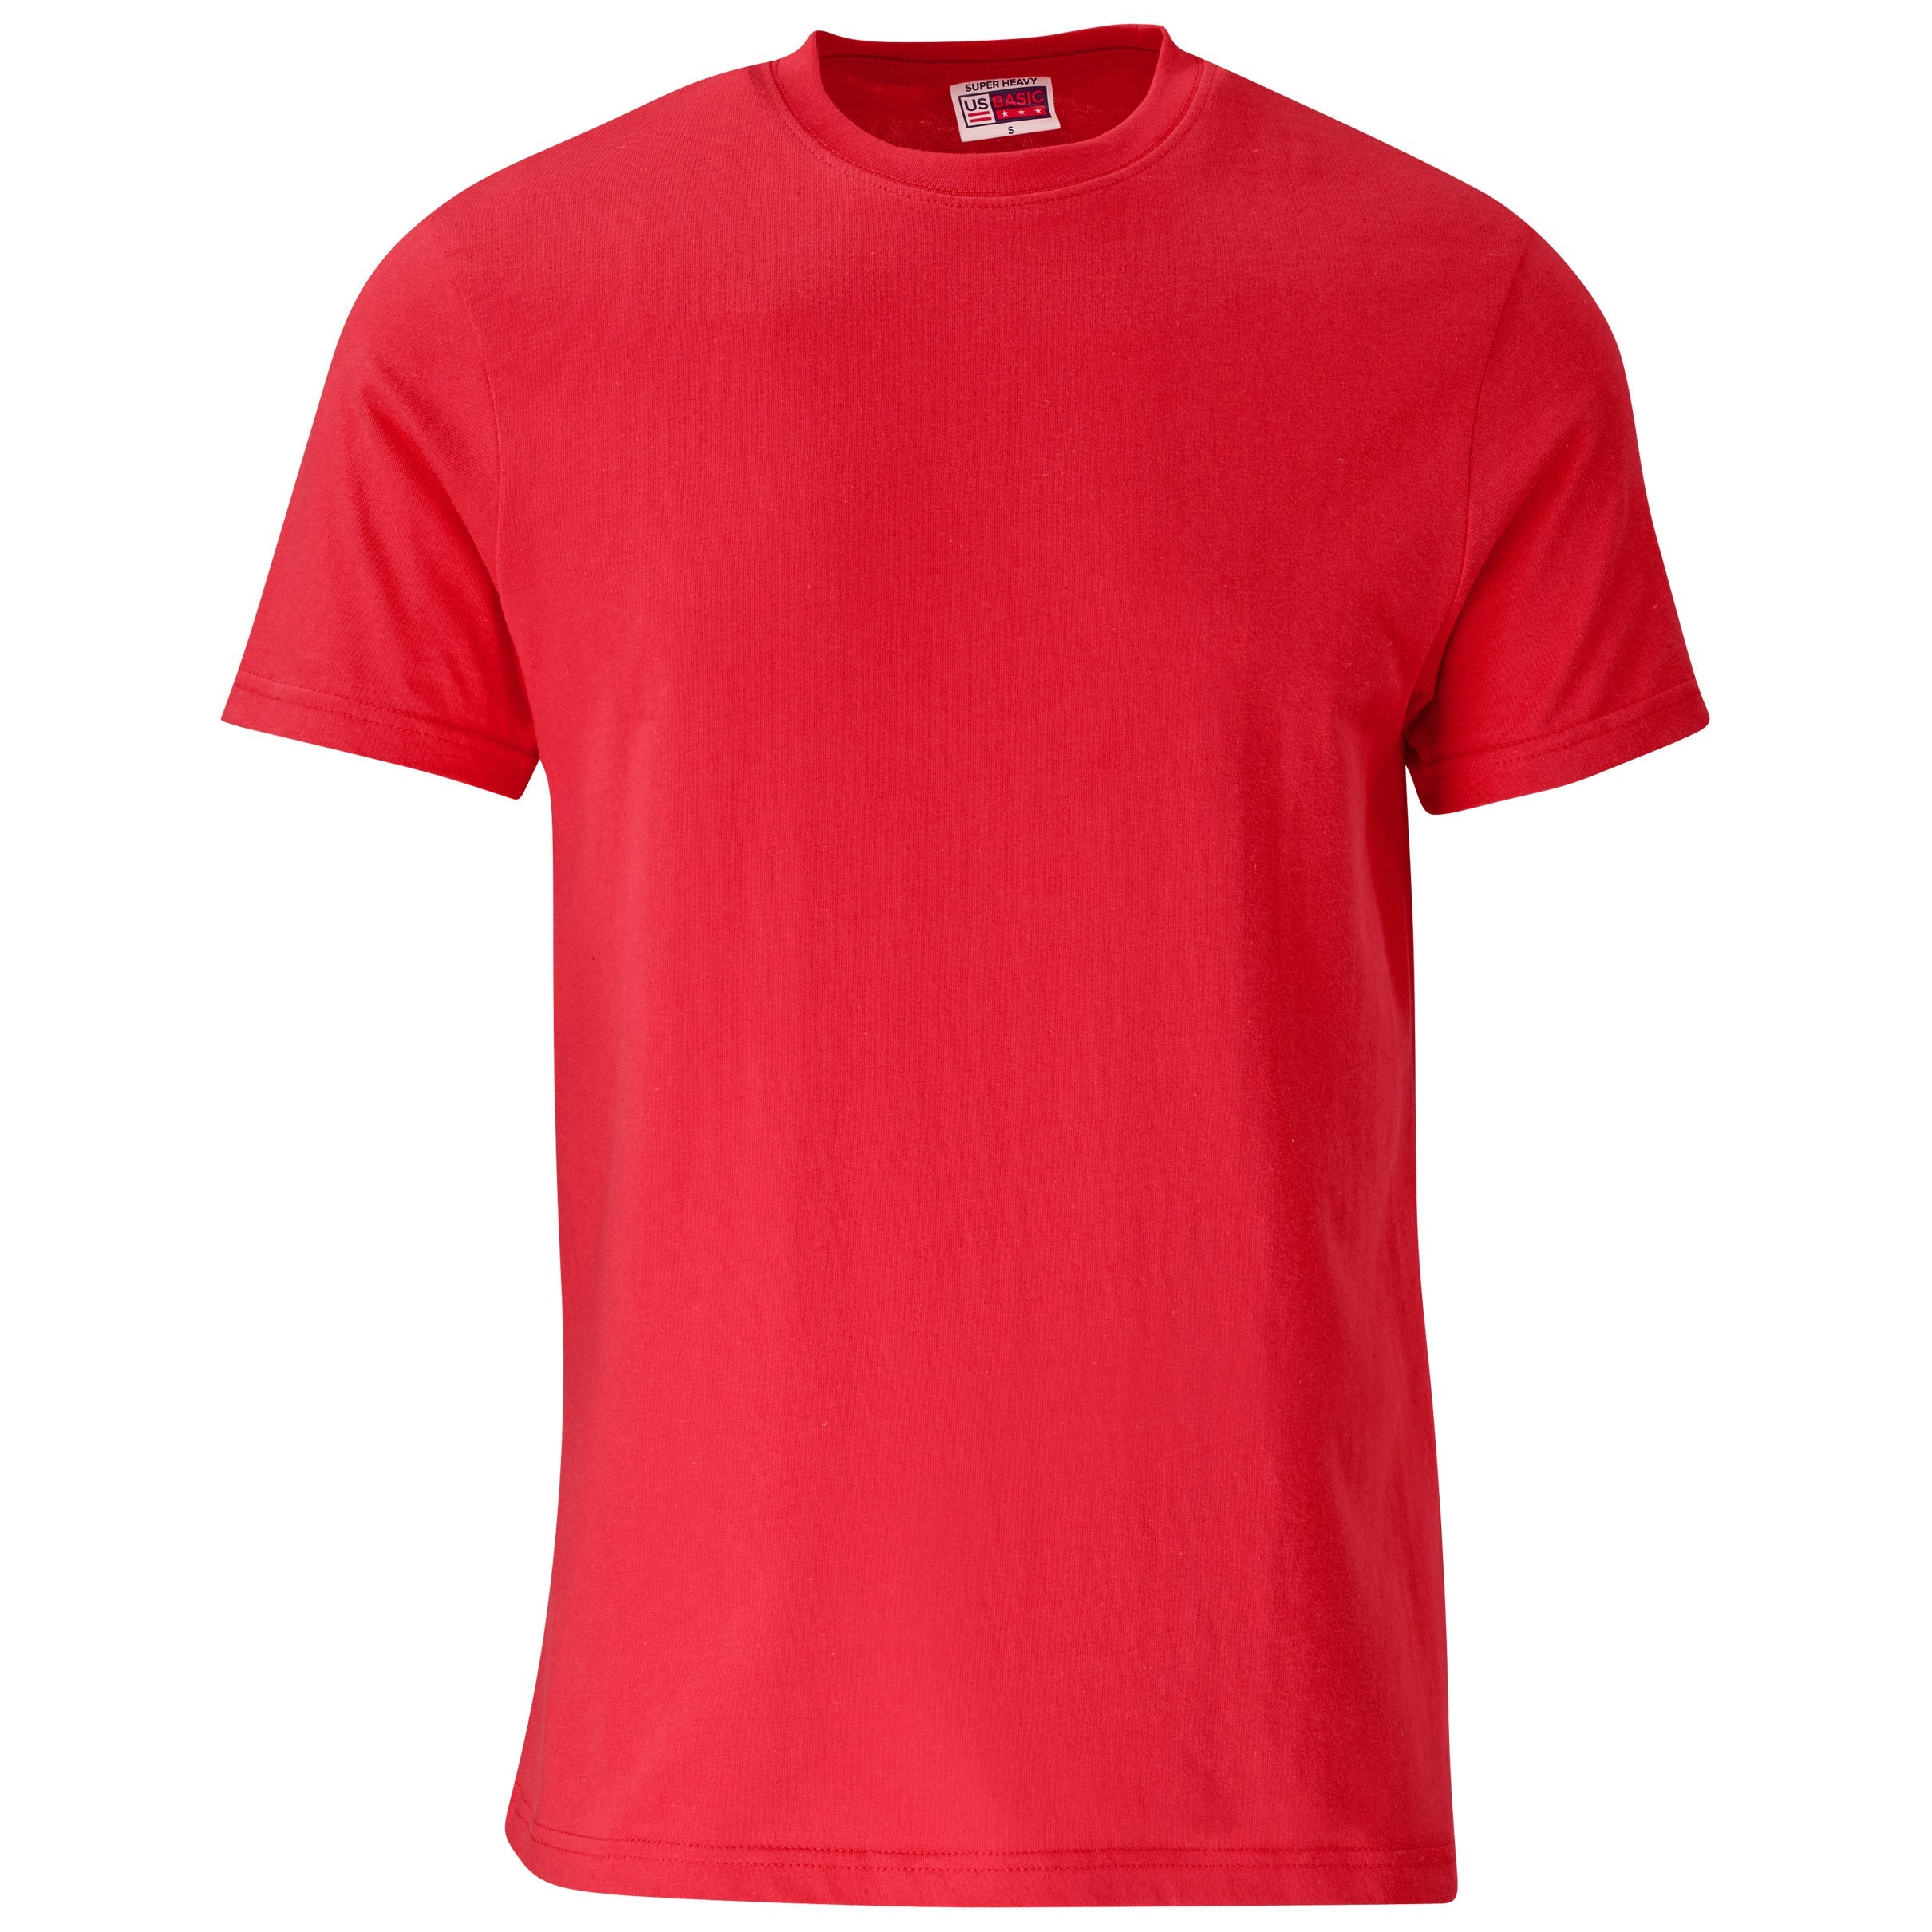 Unisex Super Club 180 T-Shirt-L-Red-R